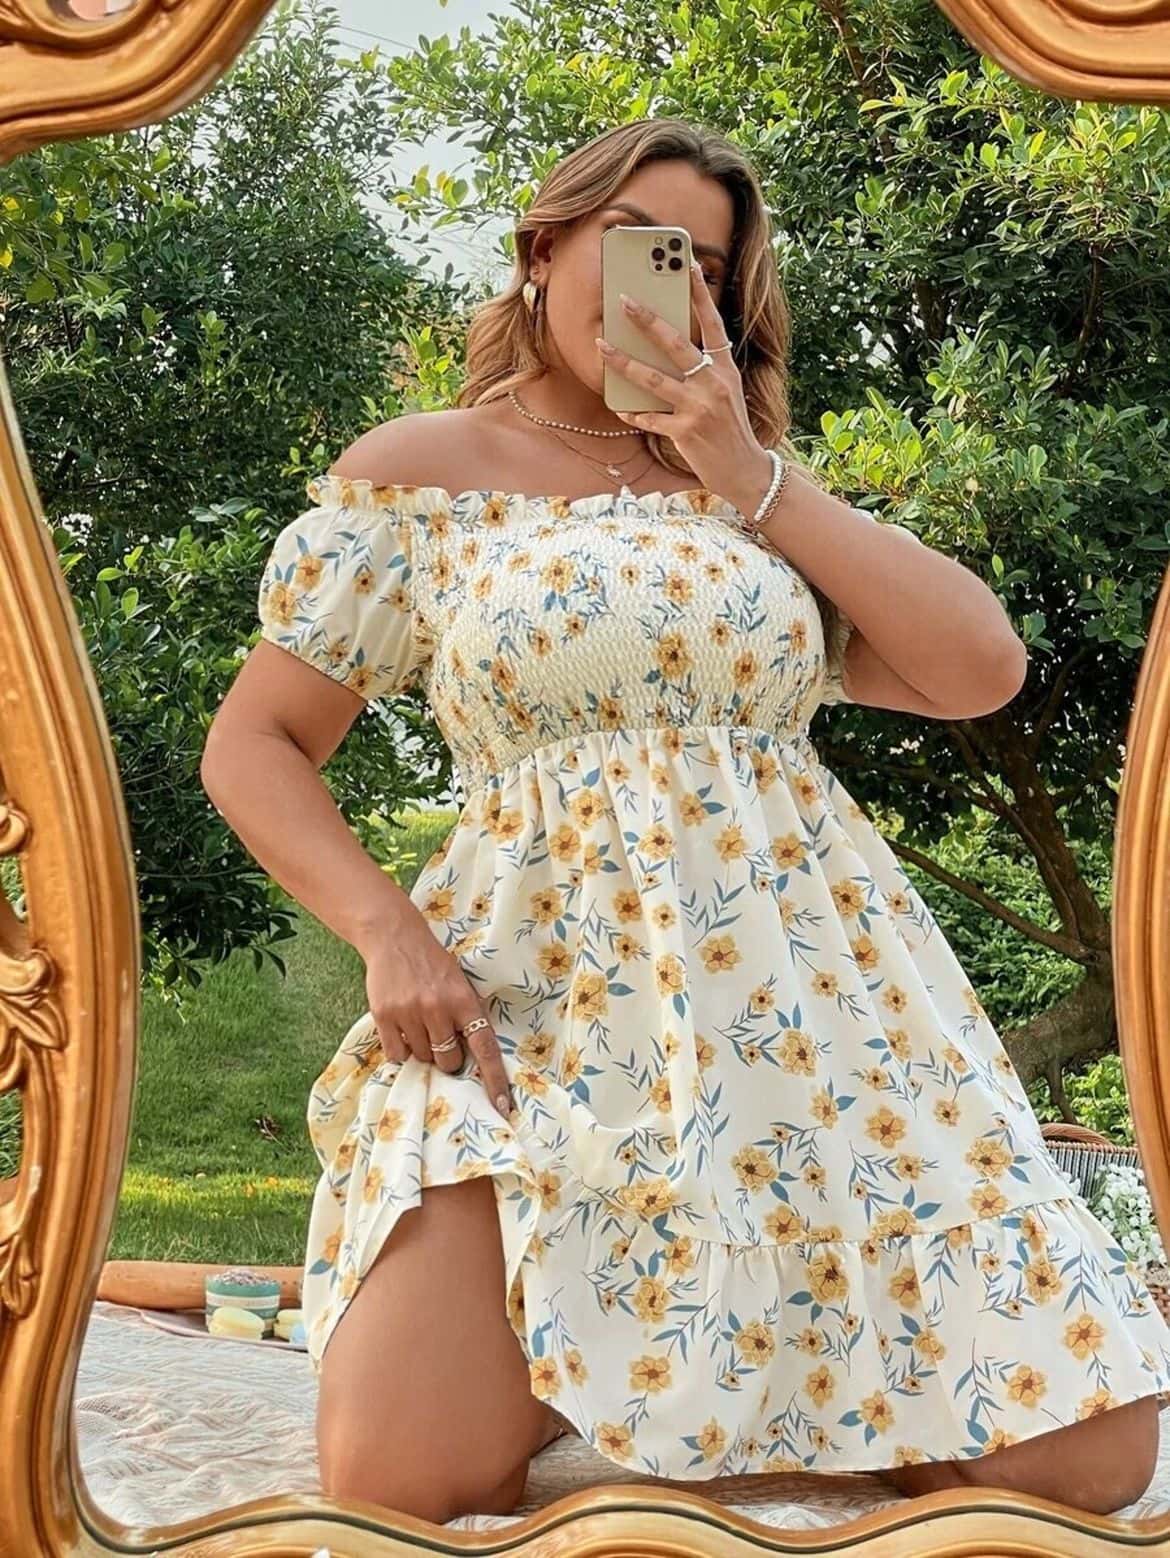 Big boobs in sundress